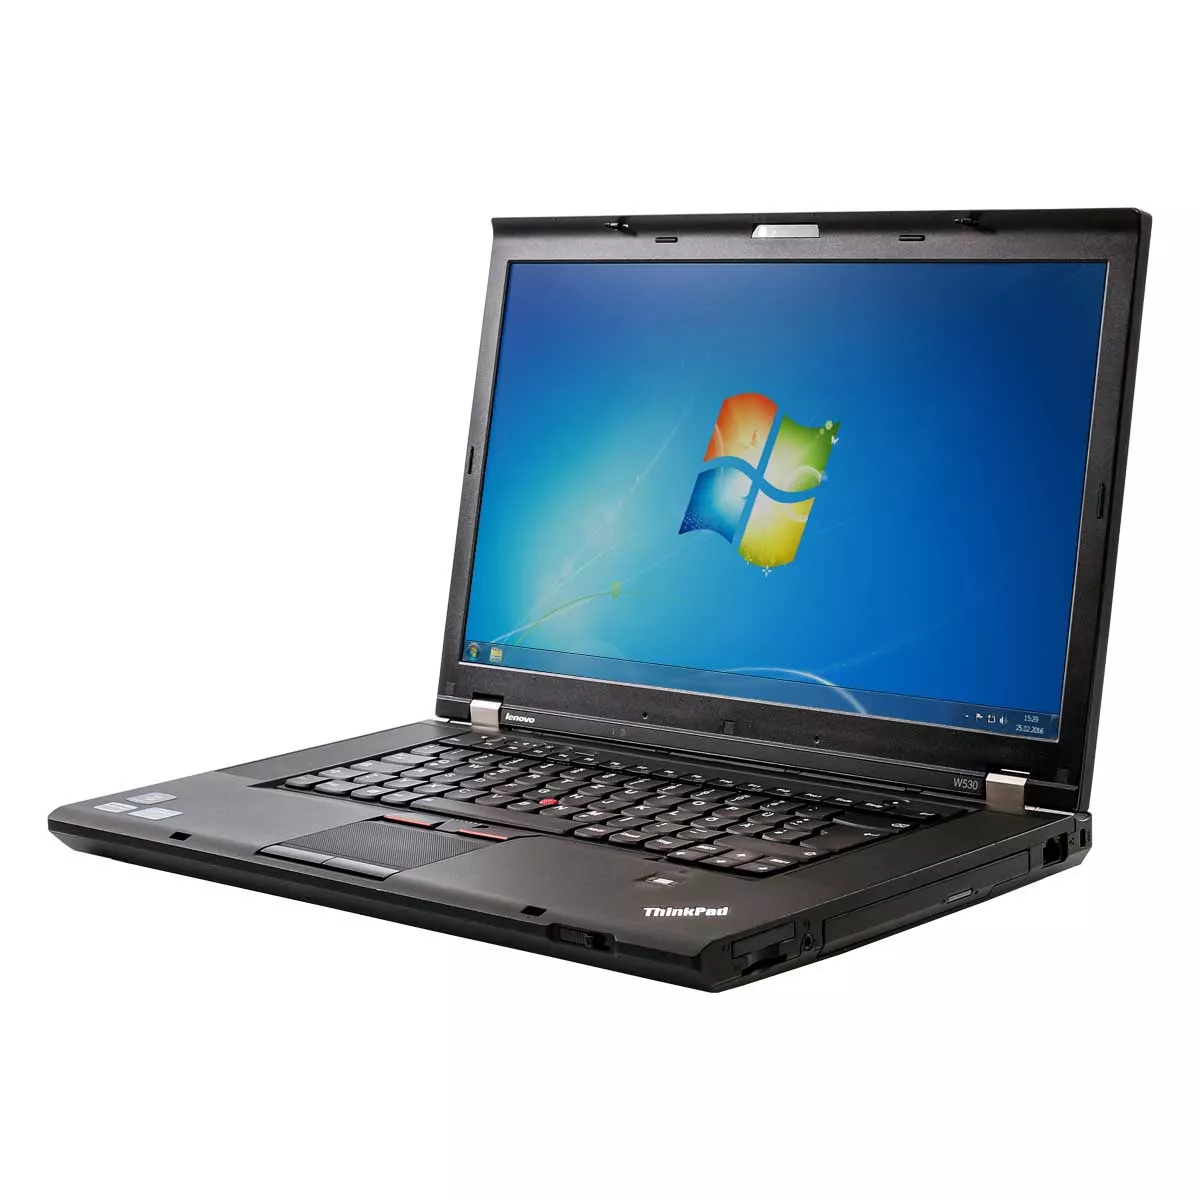 Lenovo ThinkPad W520 Quad Core i7 2720QM 2,2 GHz Webcam B-Ware